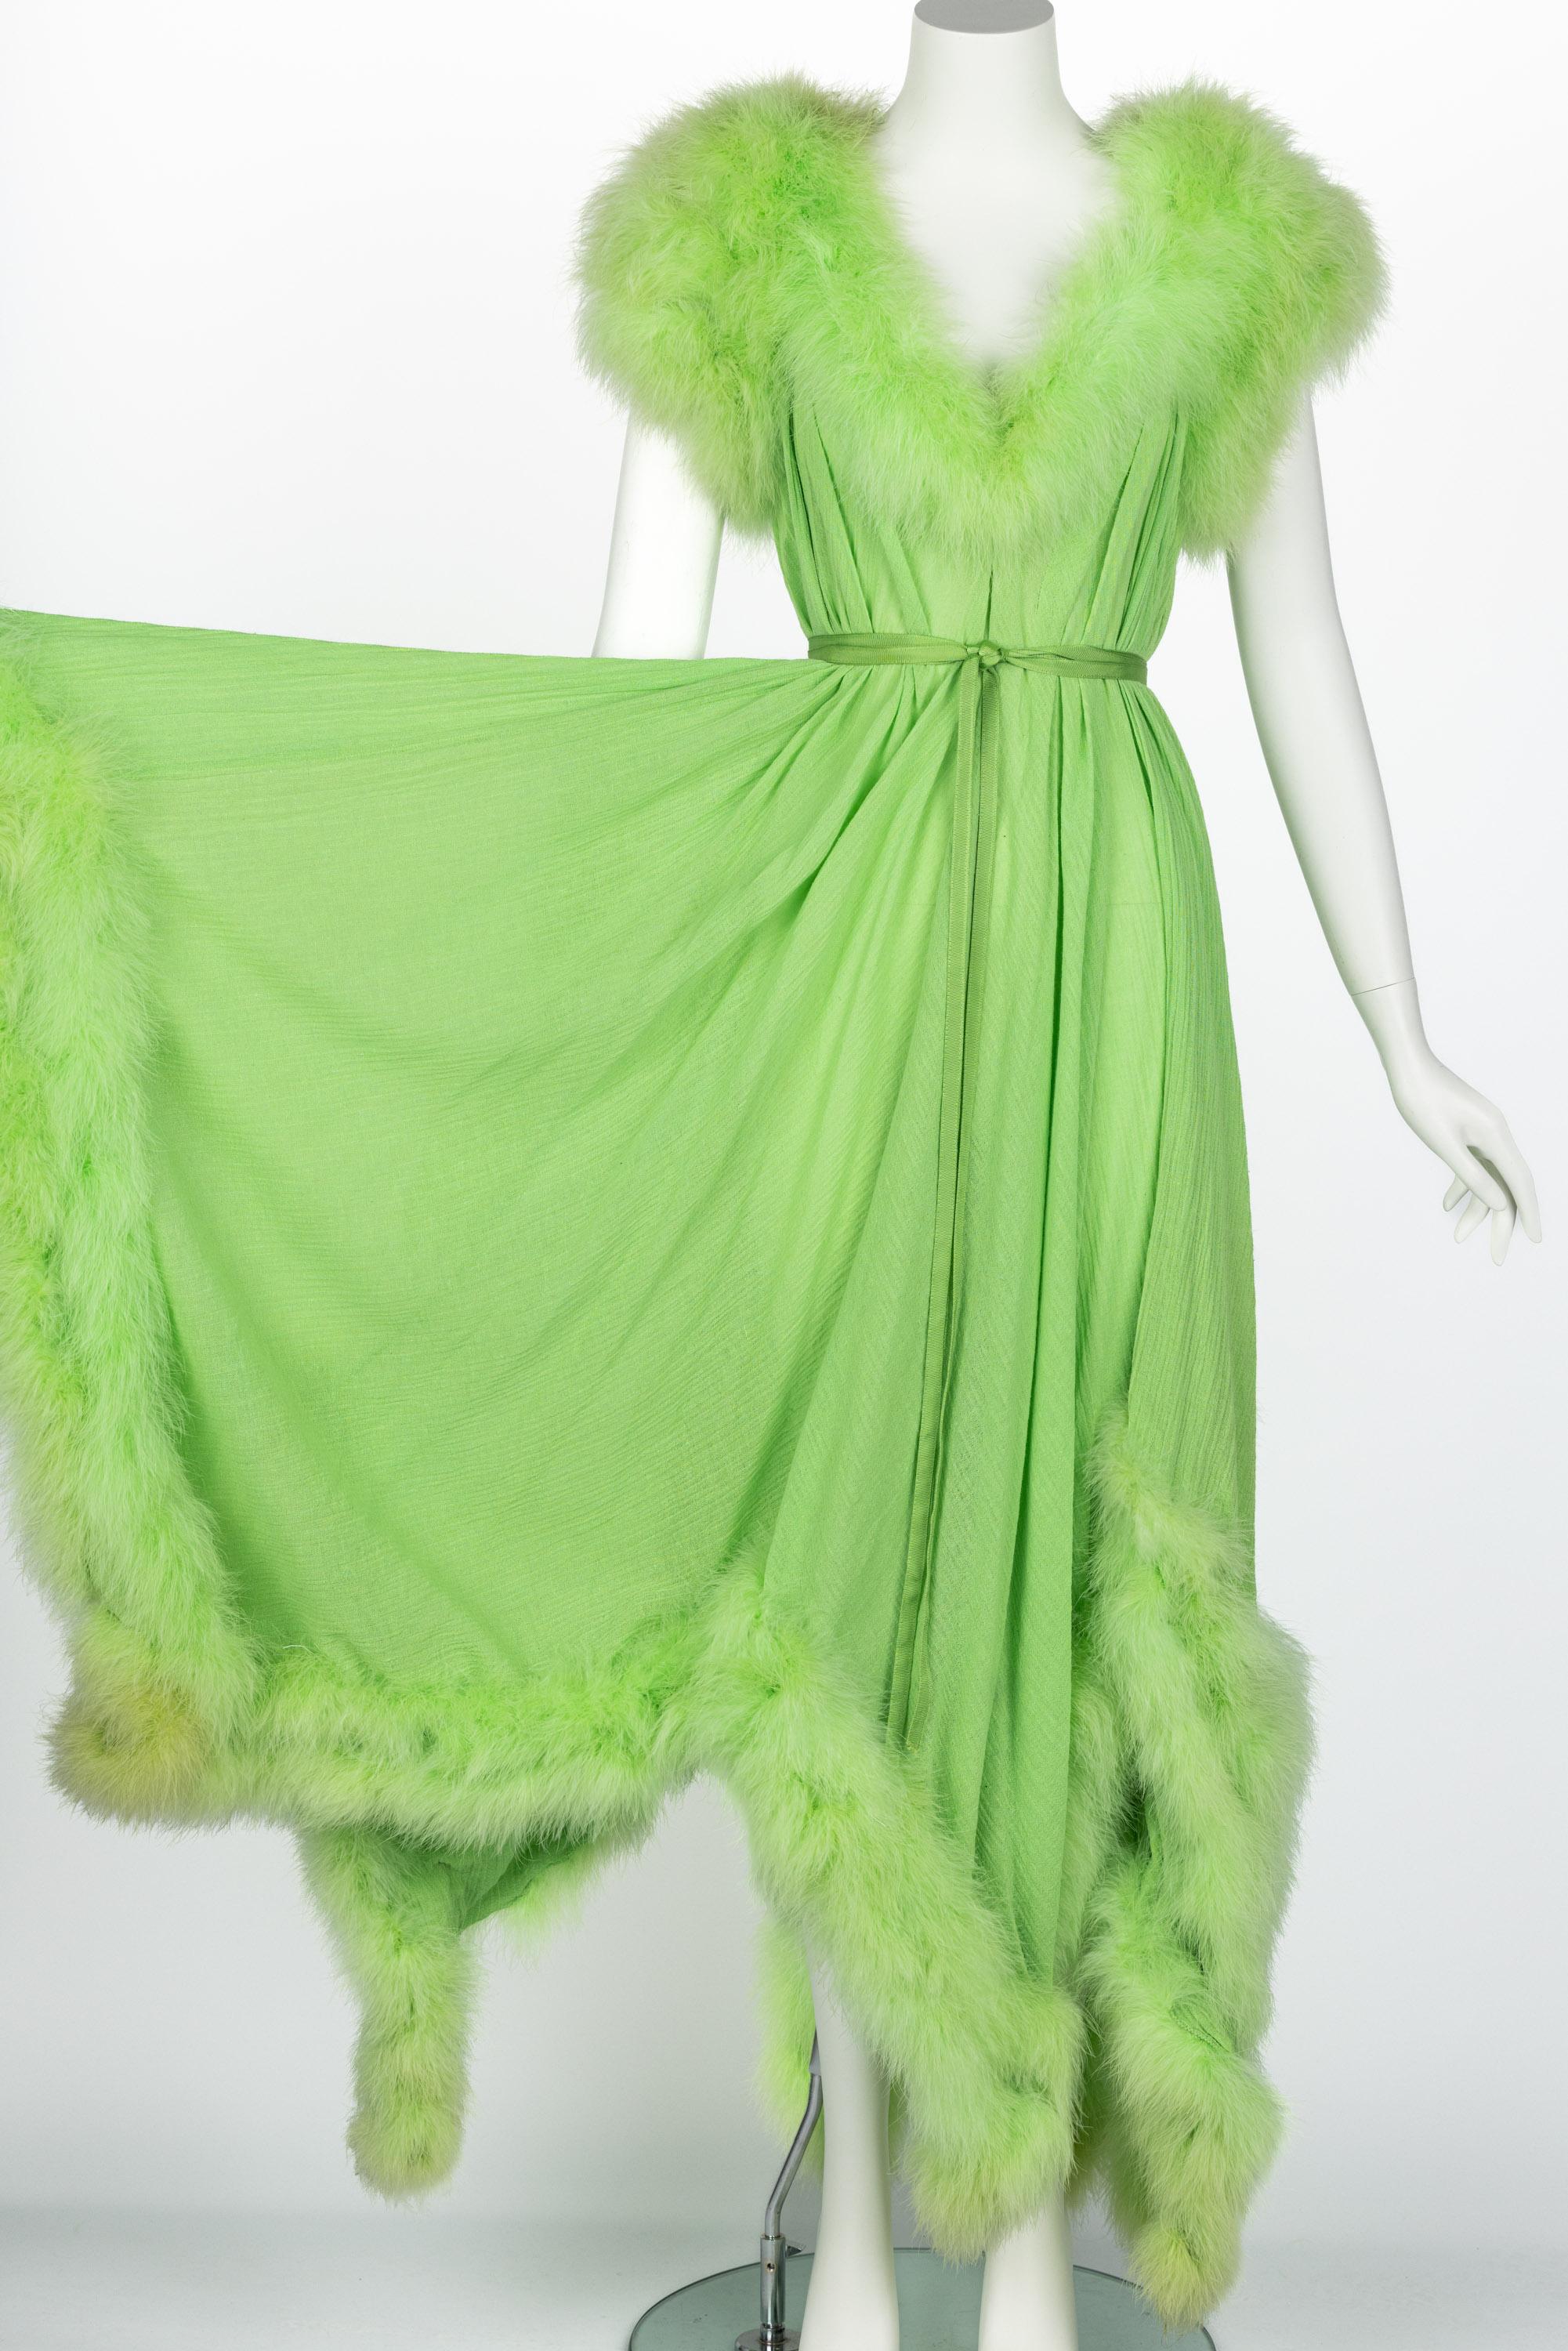 Vintage Light Green Maribou Feather Trimmed Maxi Dress  For Sale 2